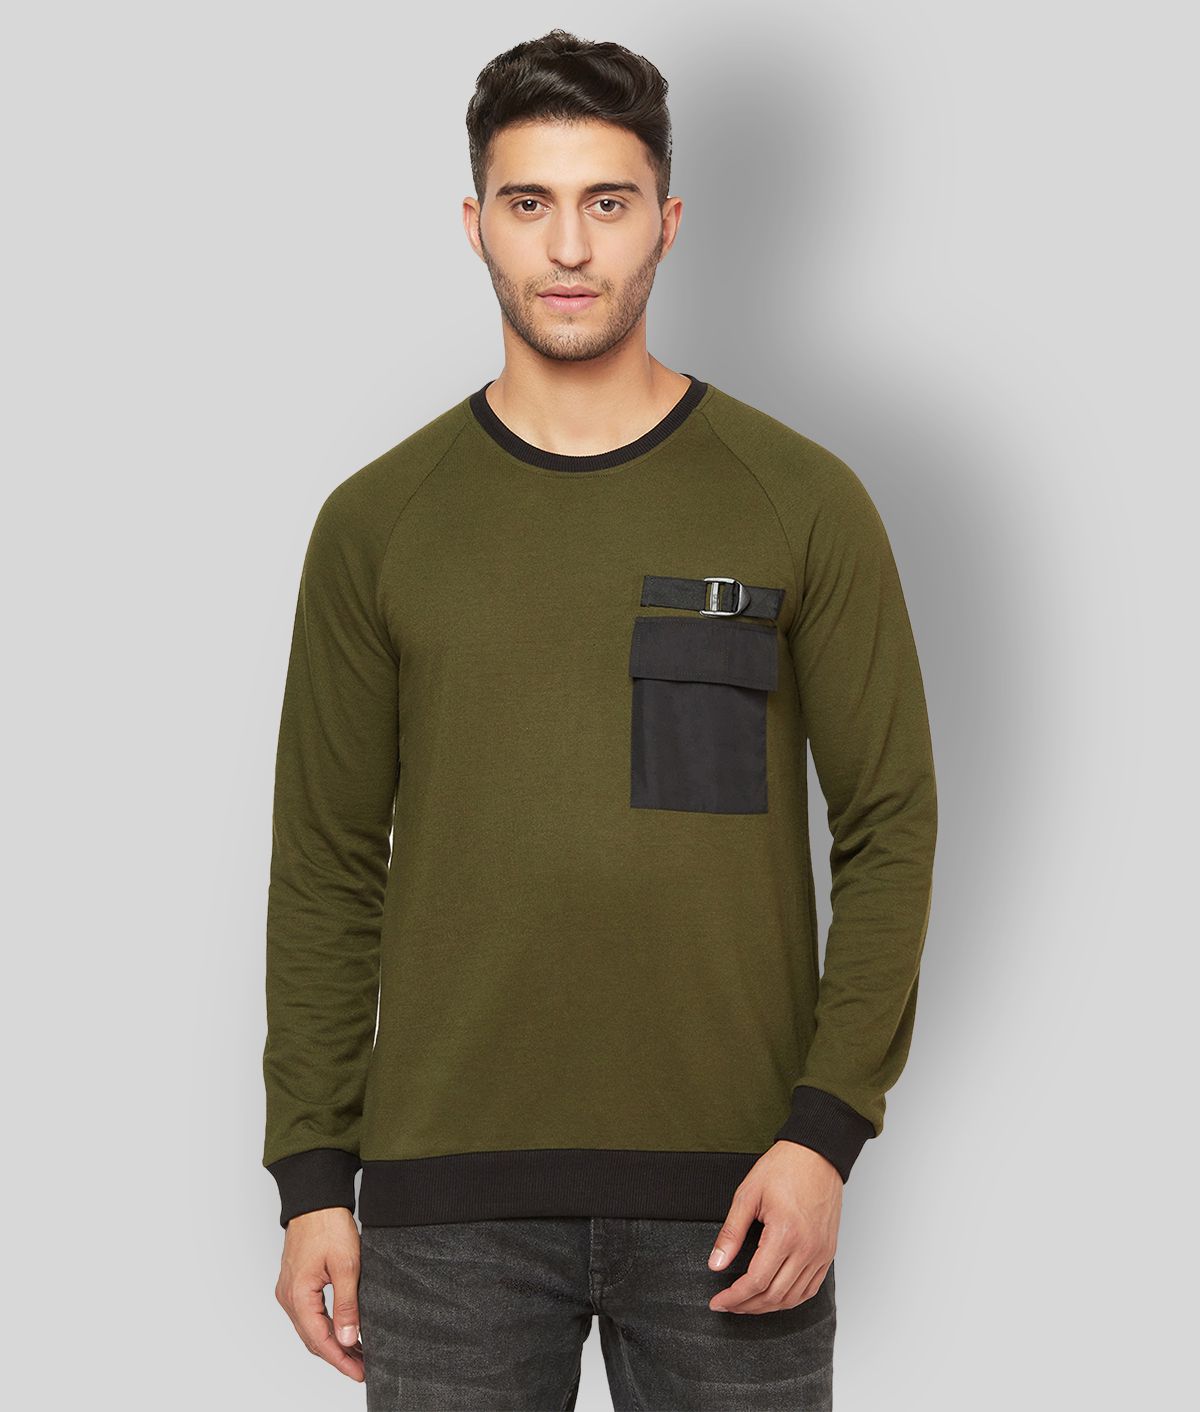     			Glito Olive Sweatshirt Pack of 1